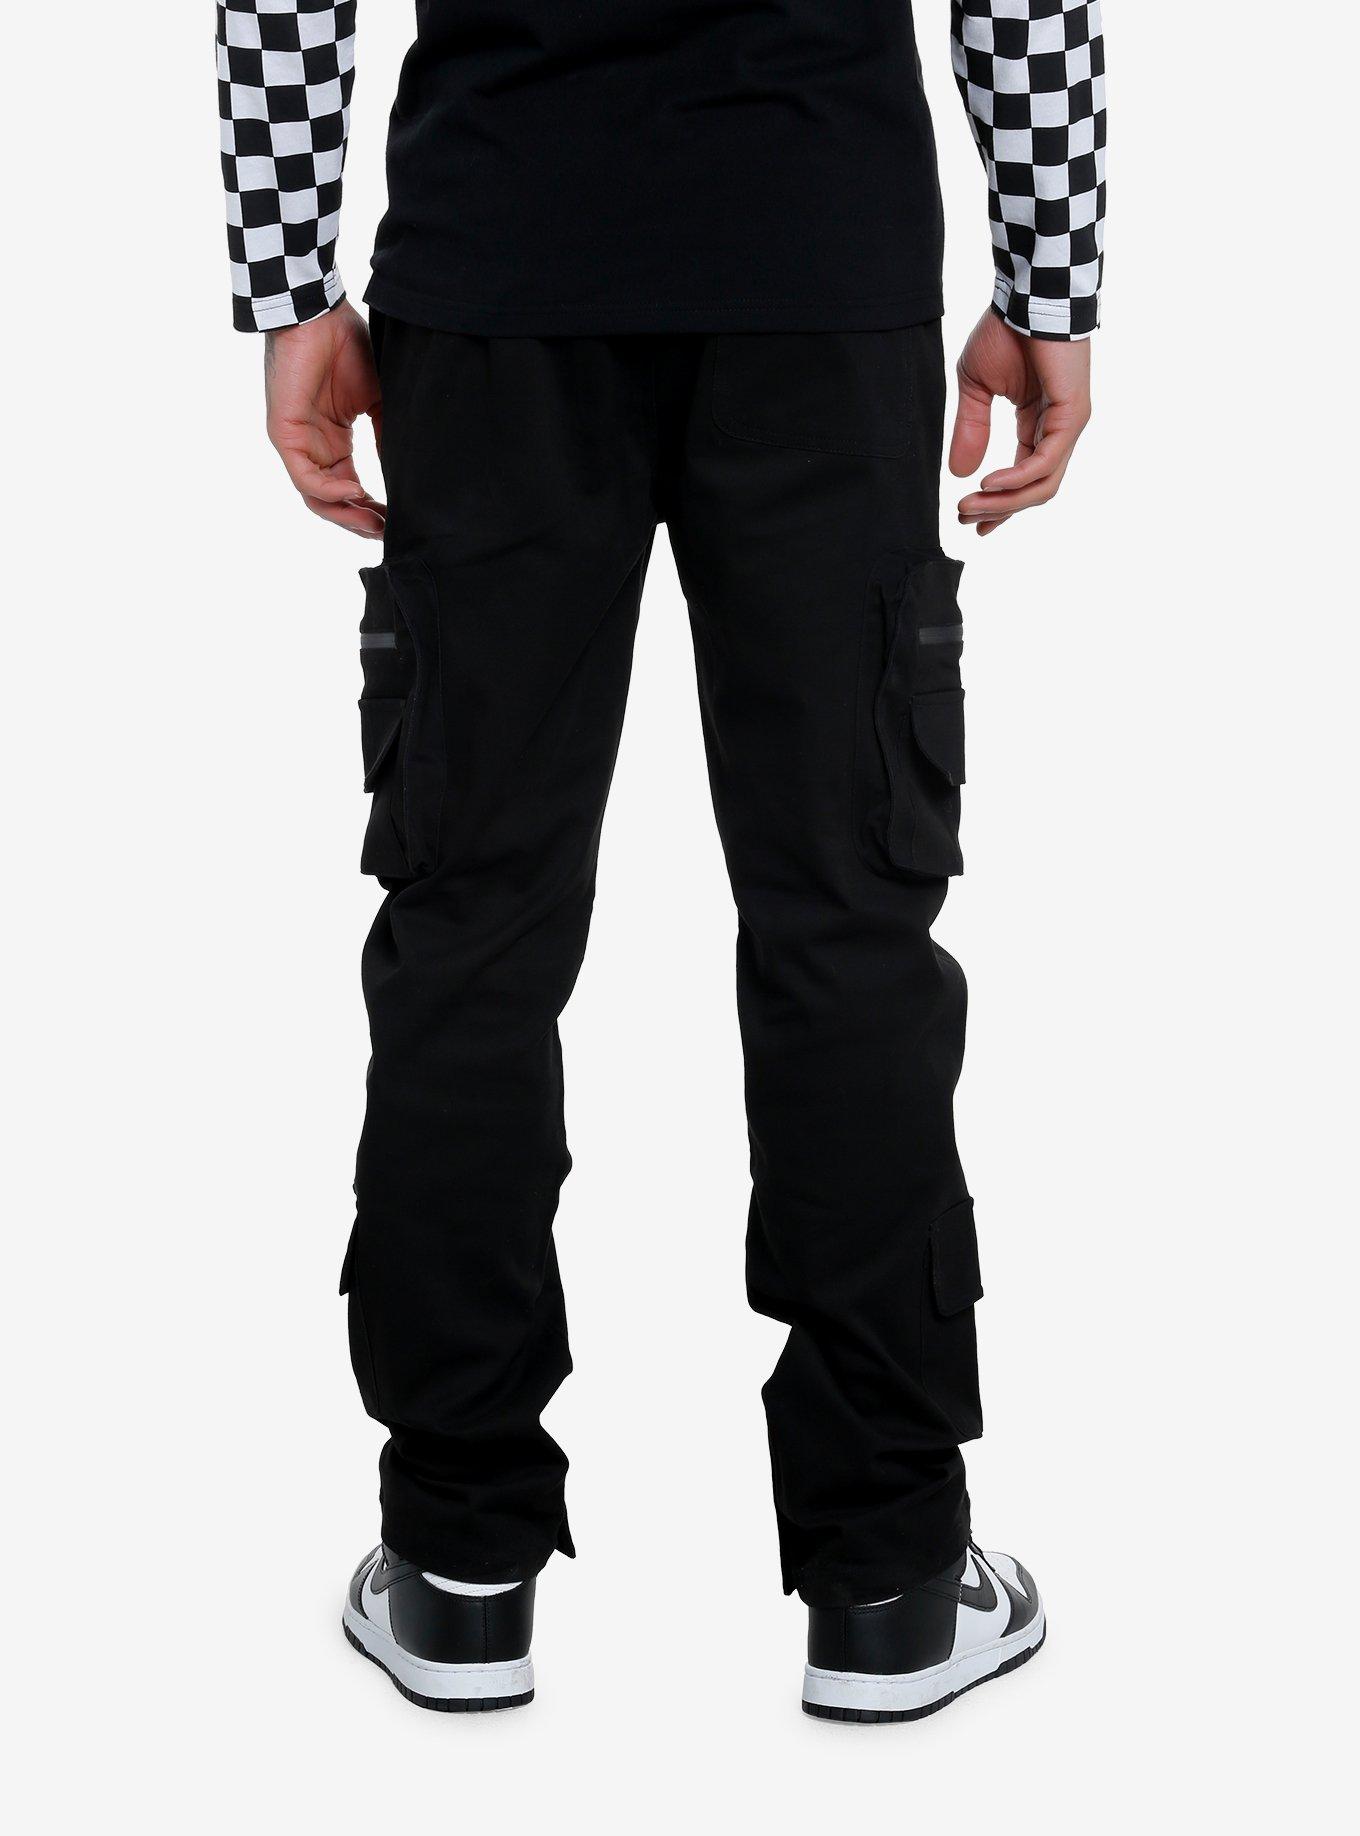 Black Multi-Pocket Cargo Pants, BLACK, alternate